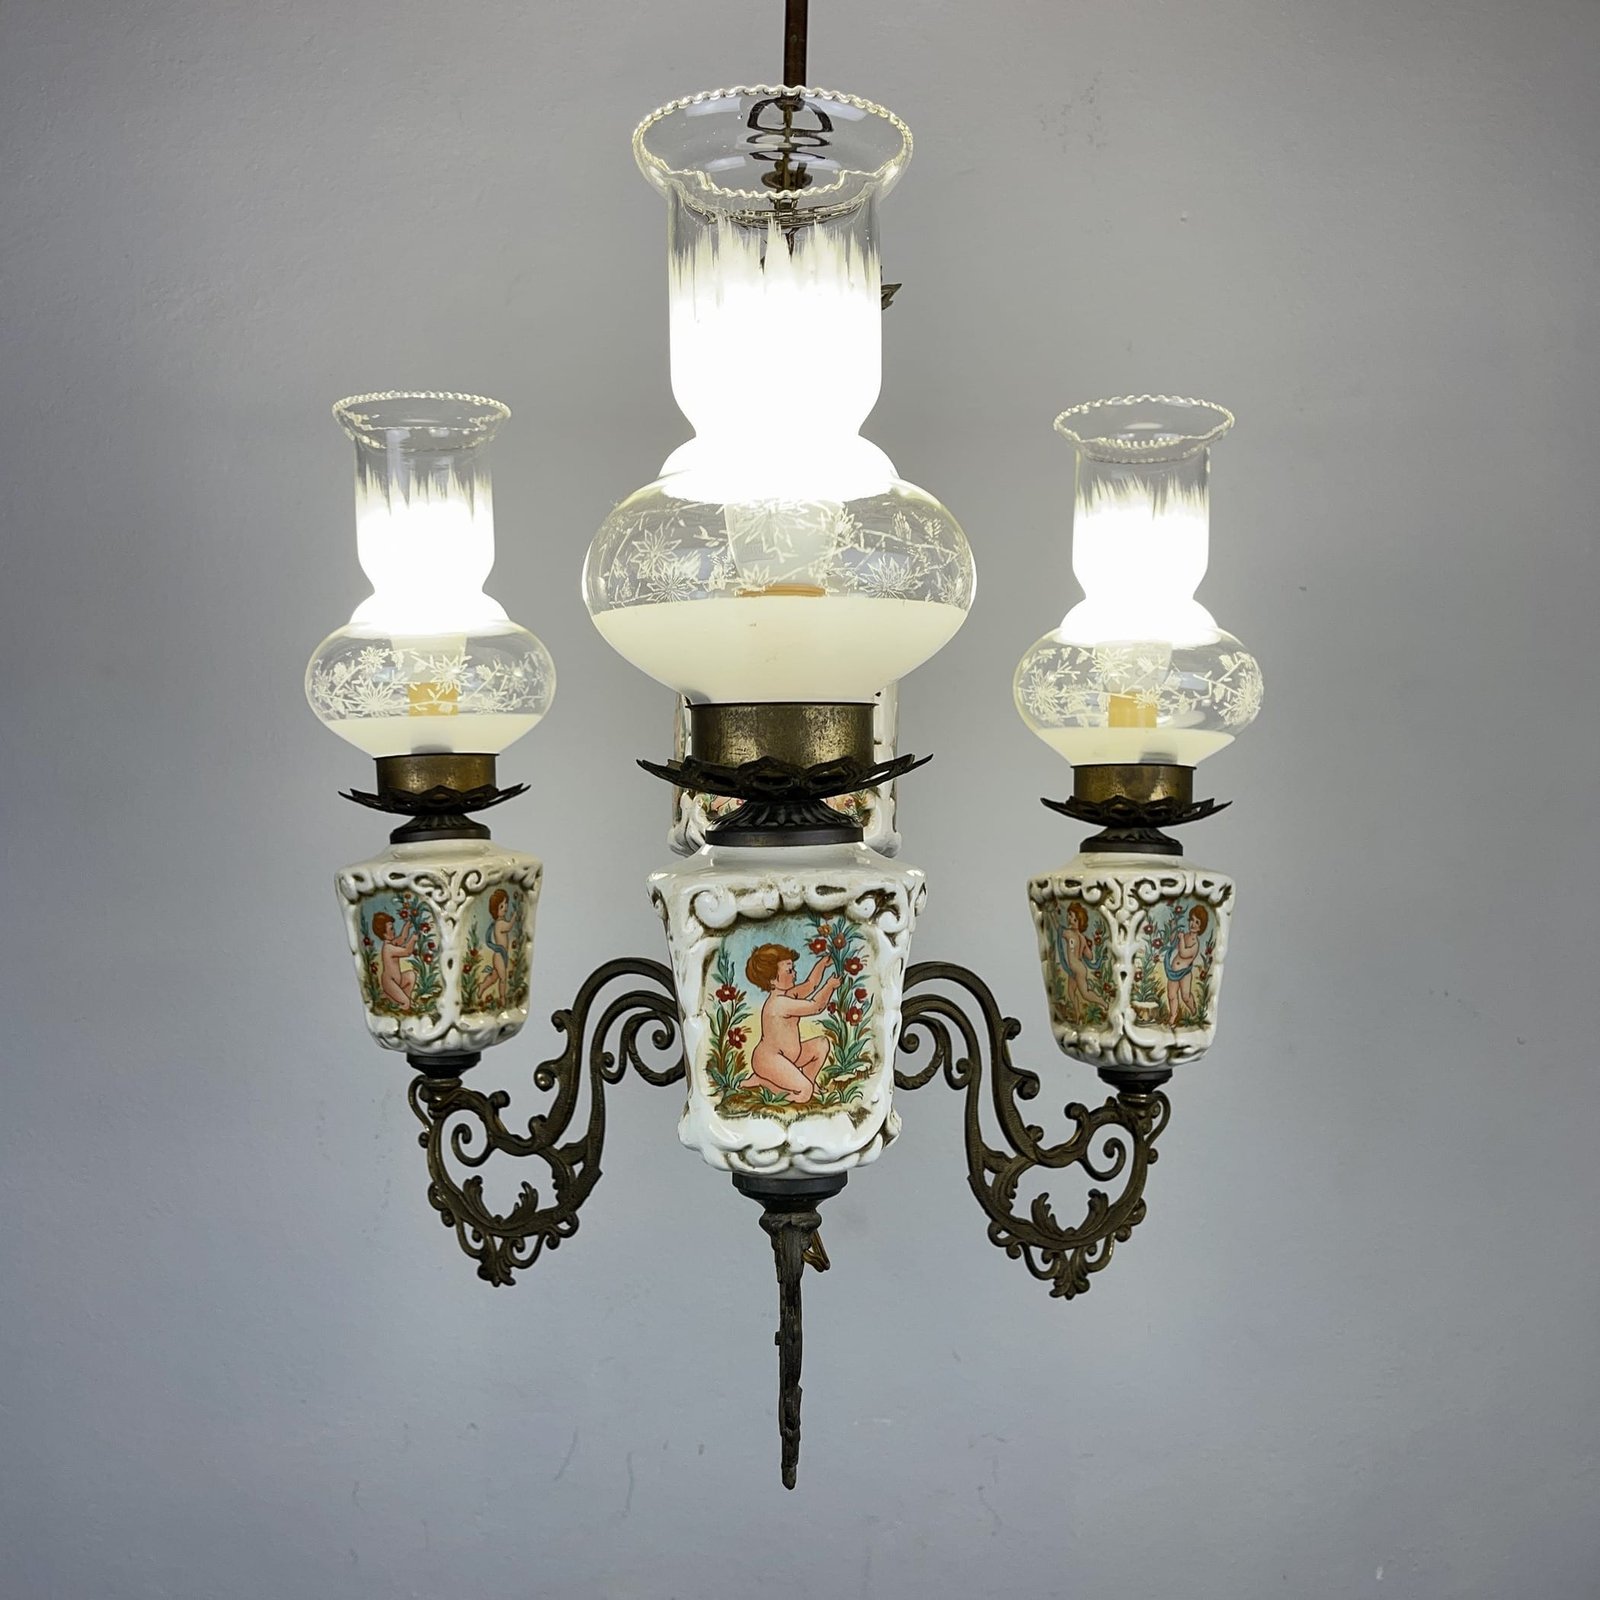 Vintage porcelain brass chandelier Italy 1950s 3 lights antique capodimonte style luxurious porcelain chandelier